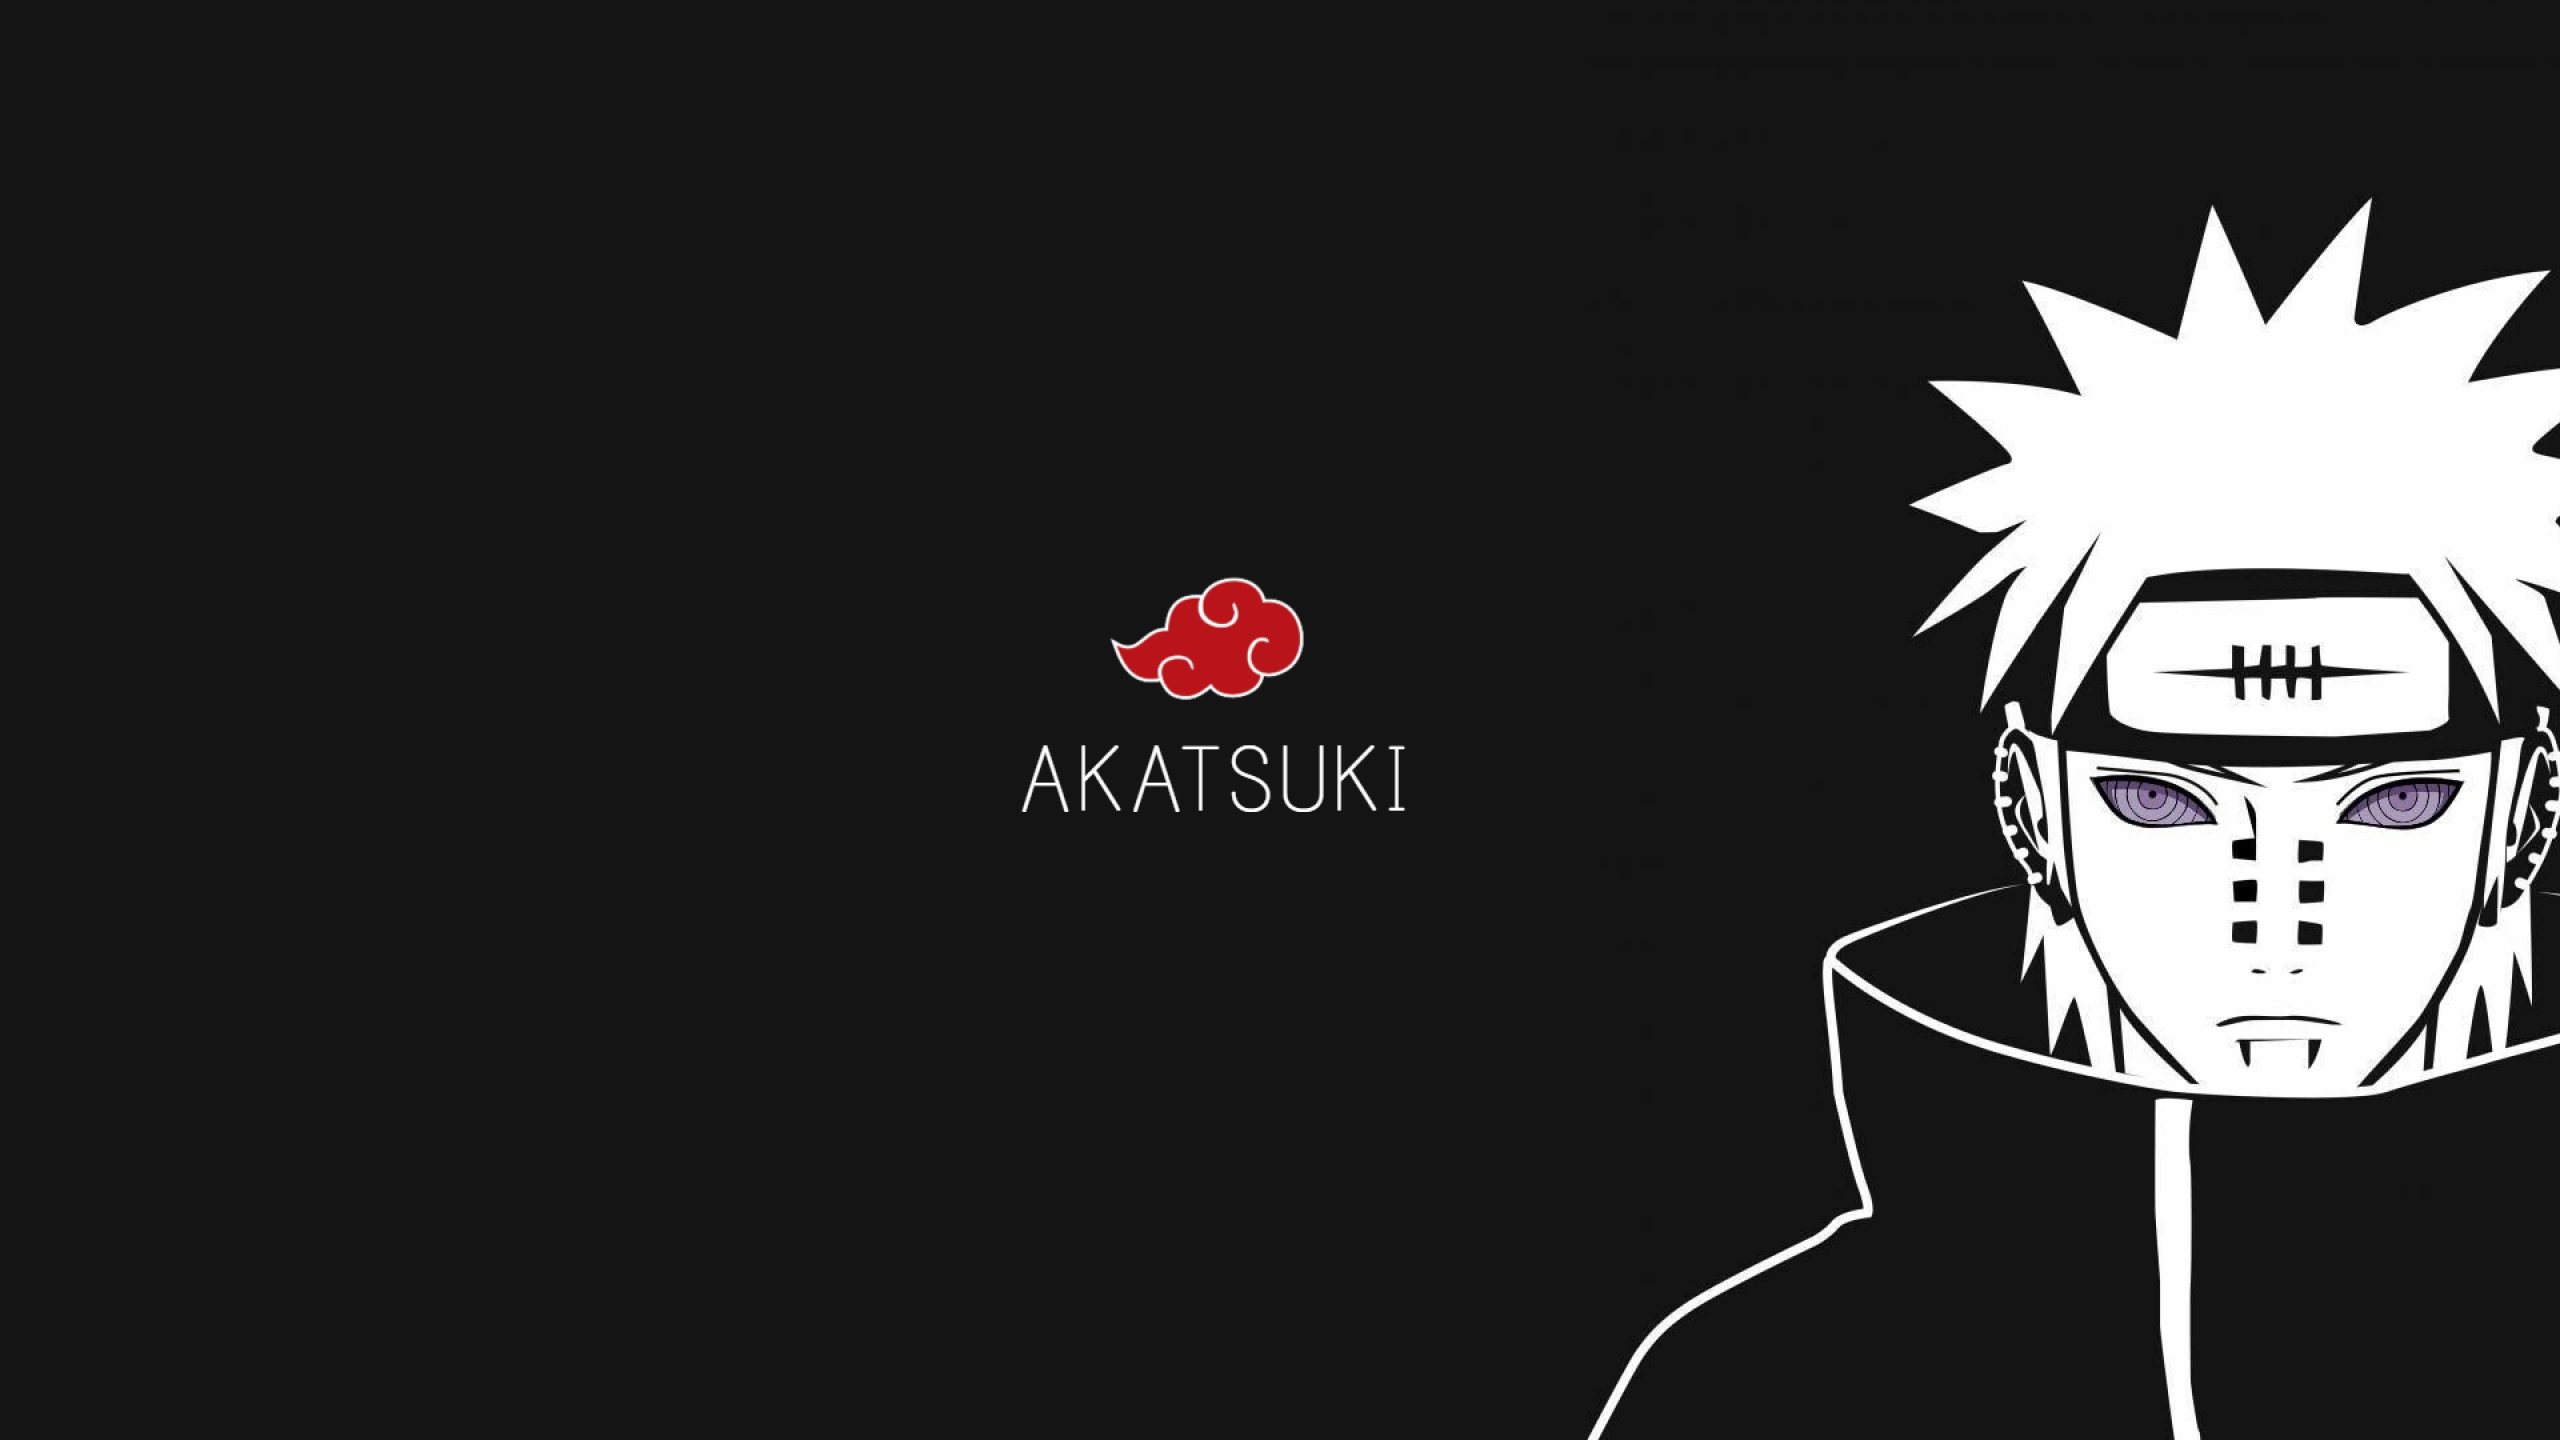 Akatsuki Organization Anime Wallpapers